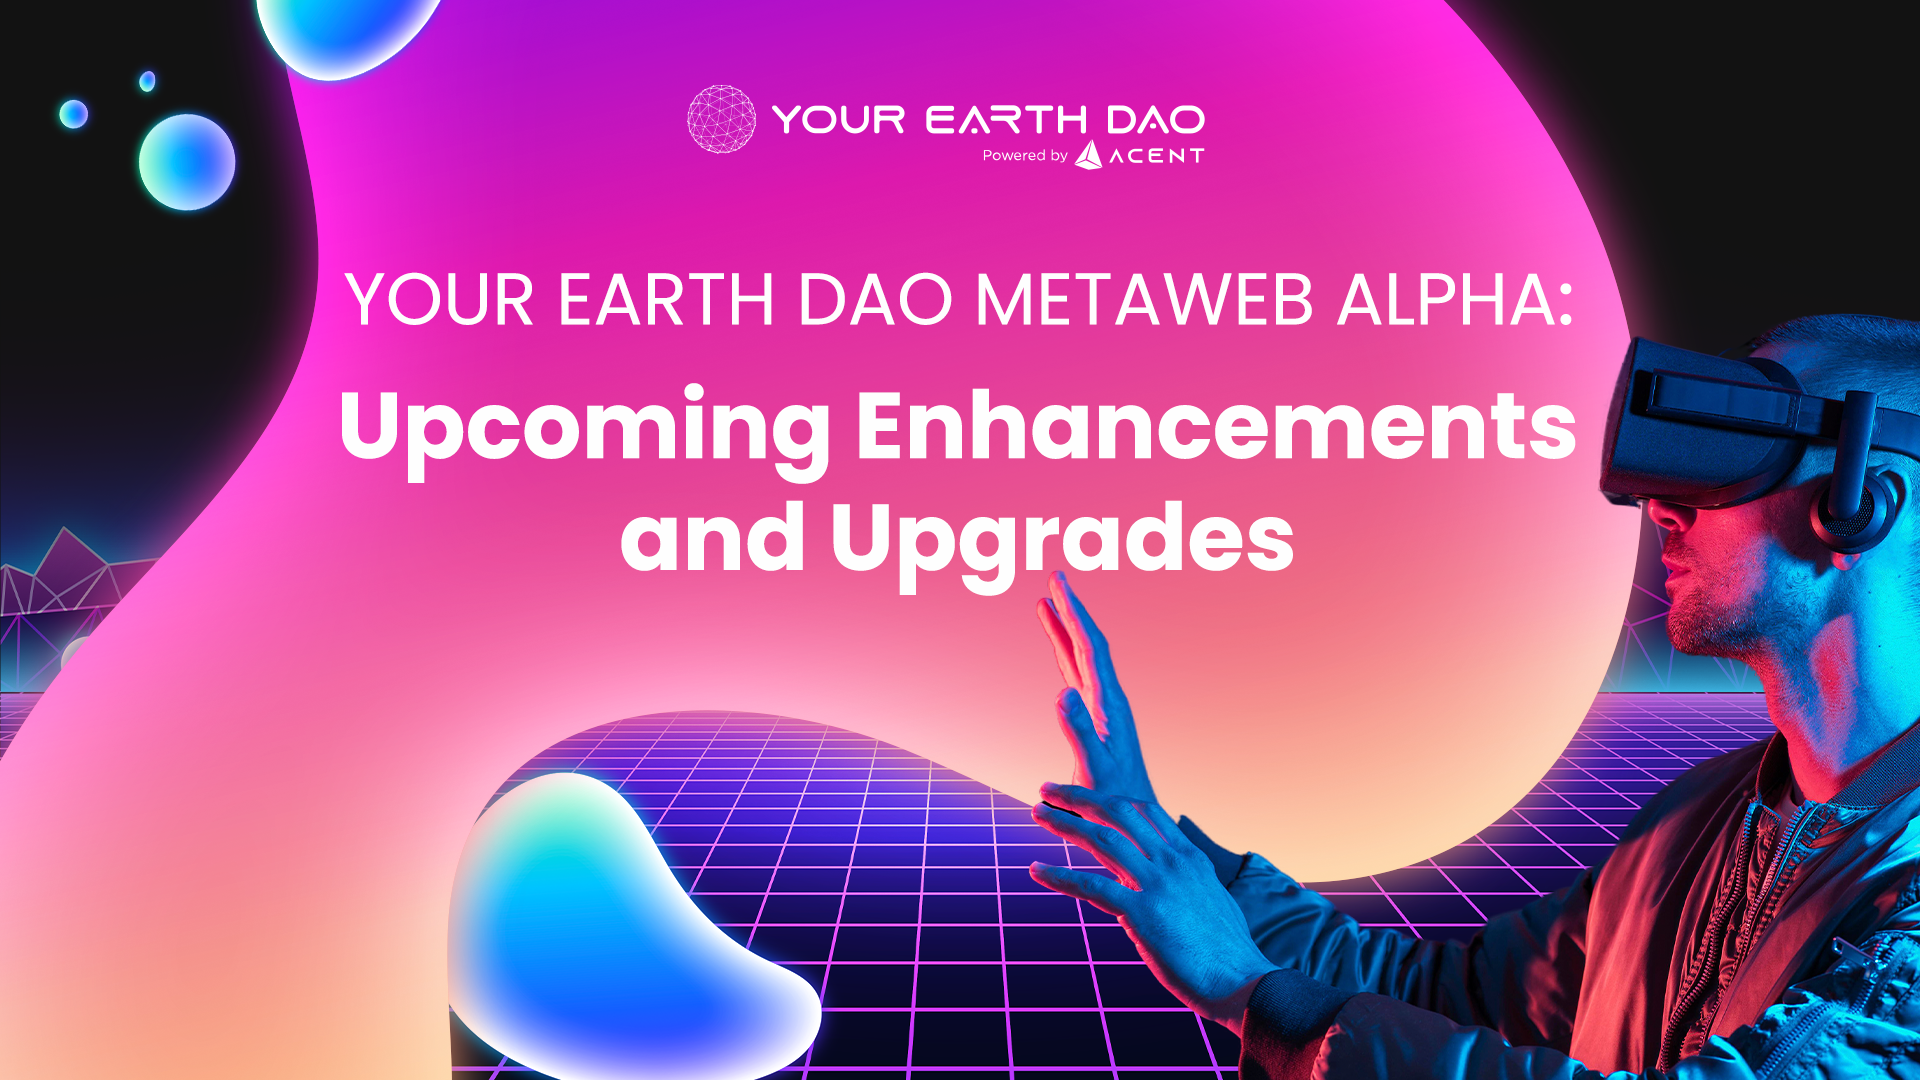 Your Earth DAO metaweb alpha